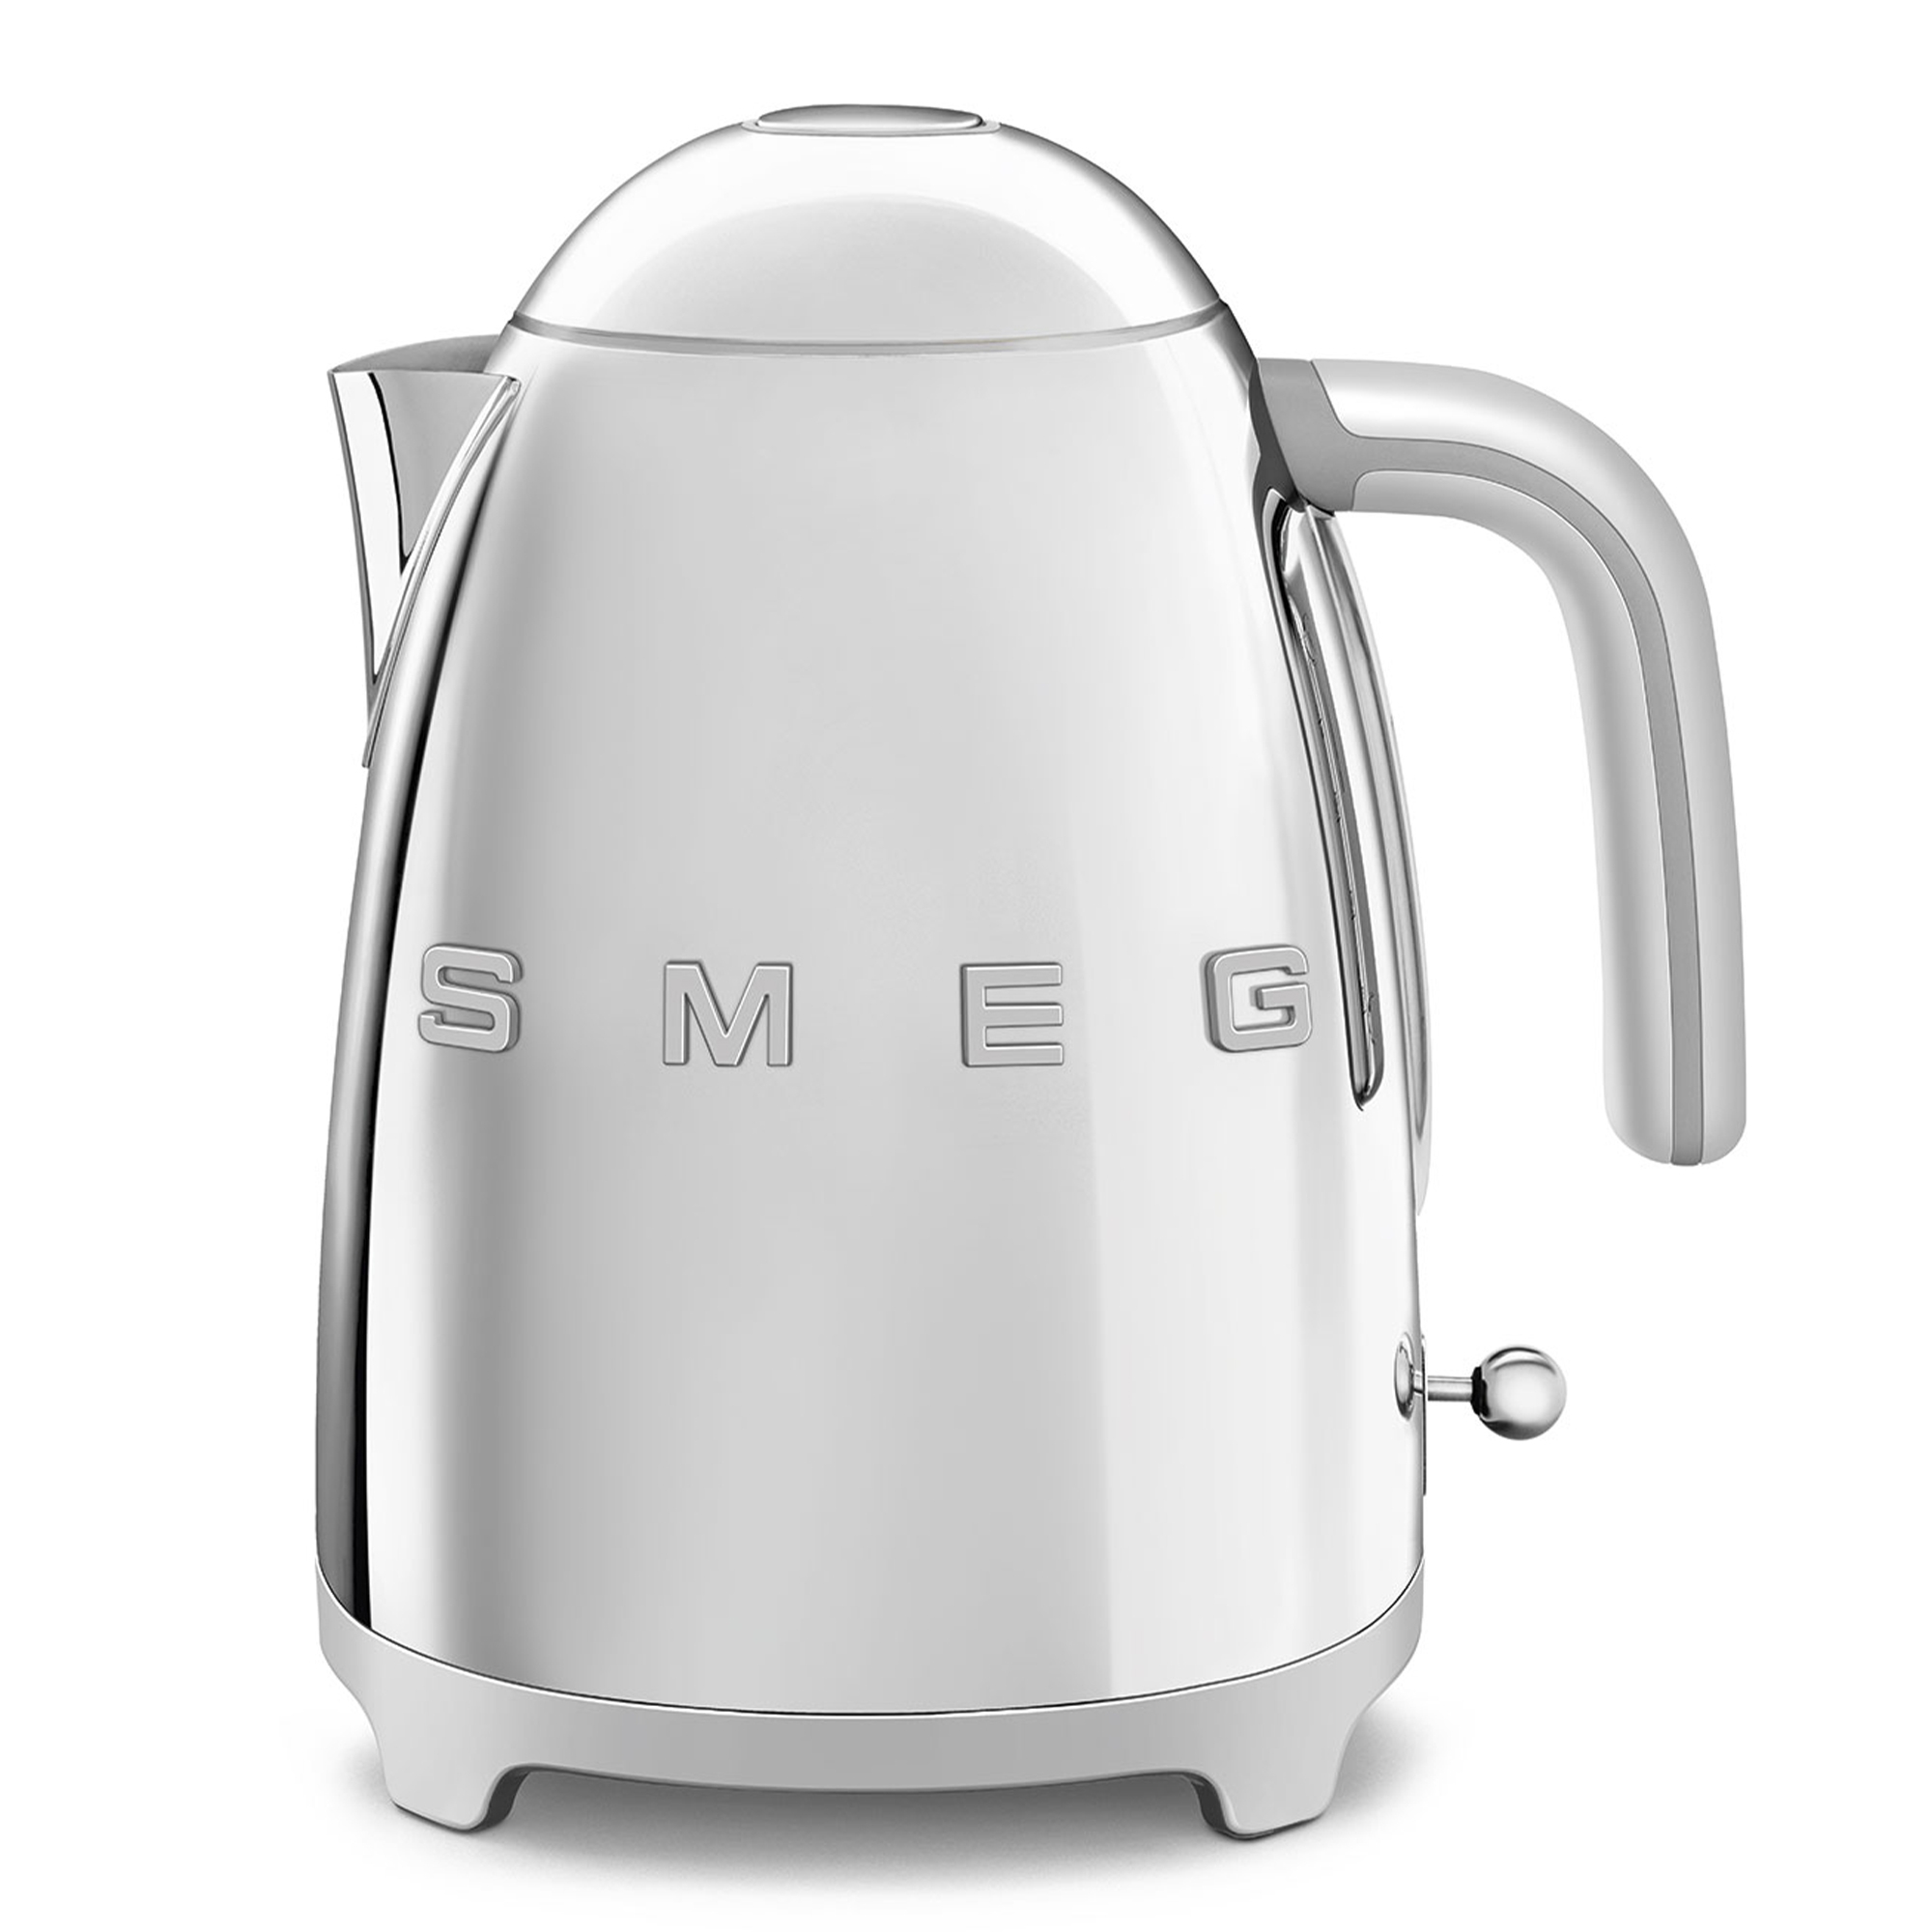 Smeg - 1.7 L kettle - design line style The 50 ° years - chrome